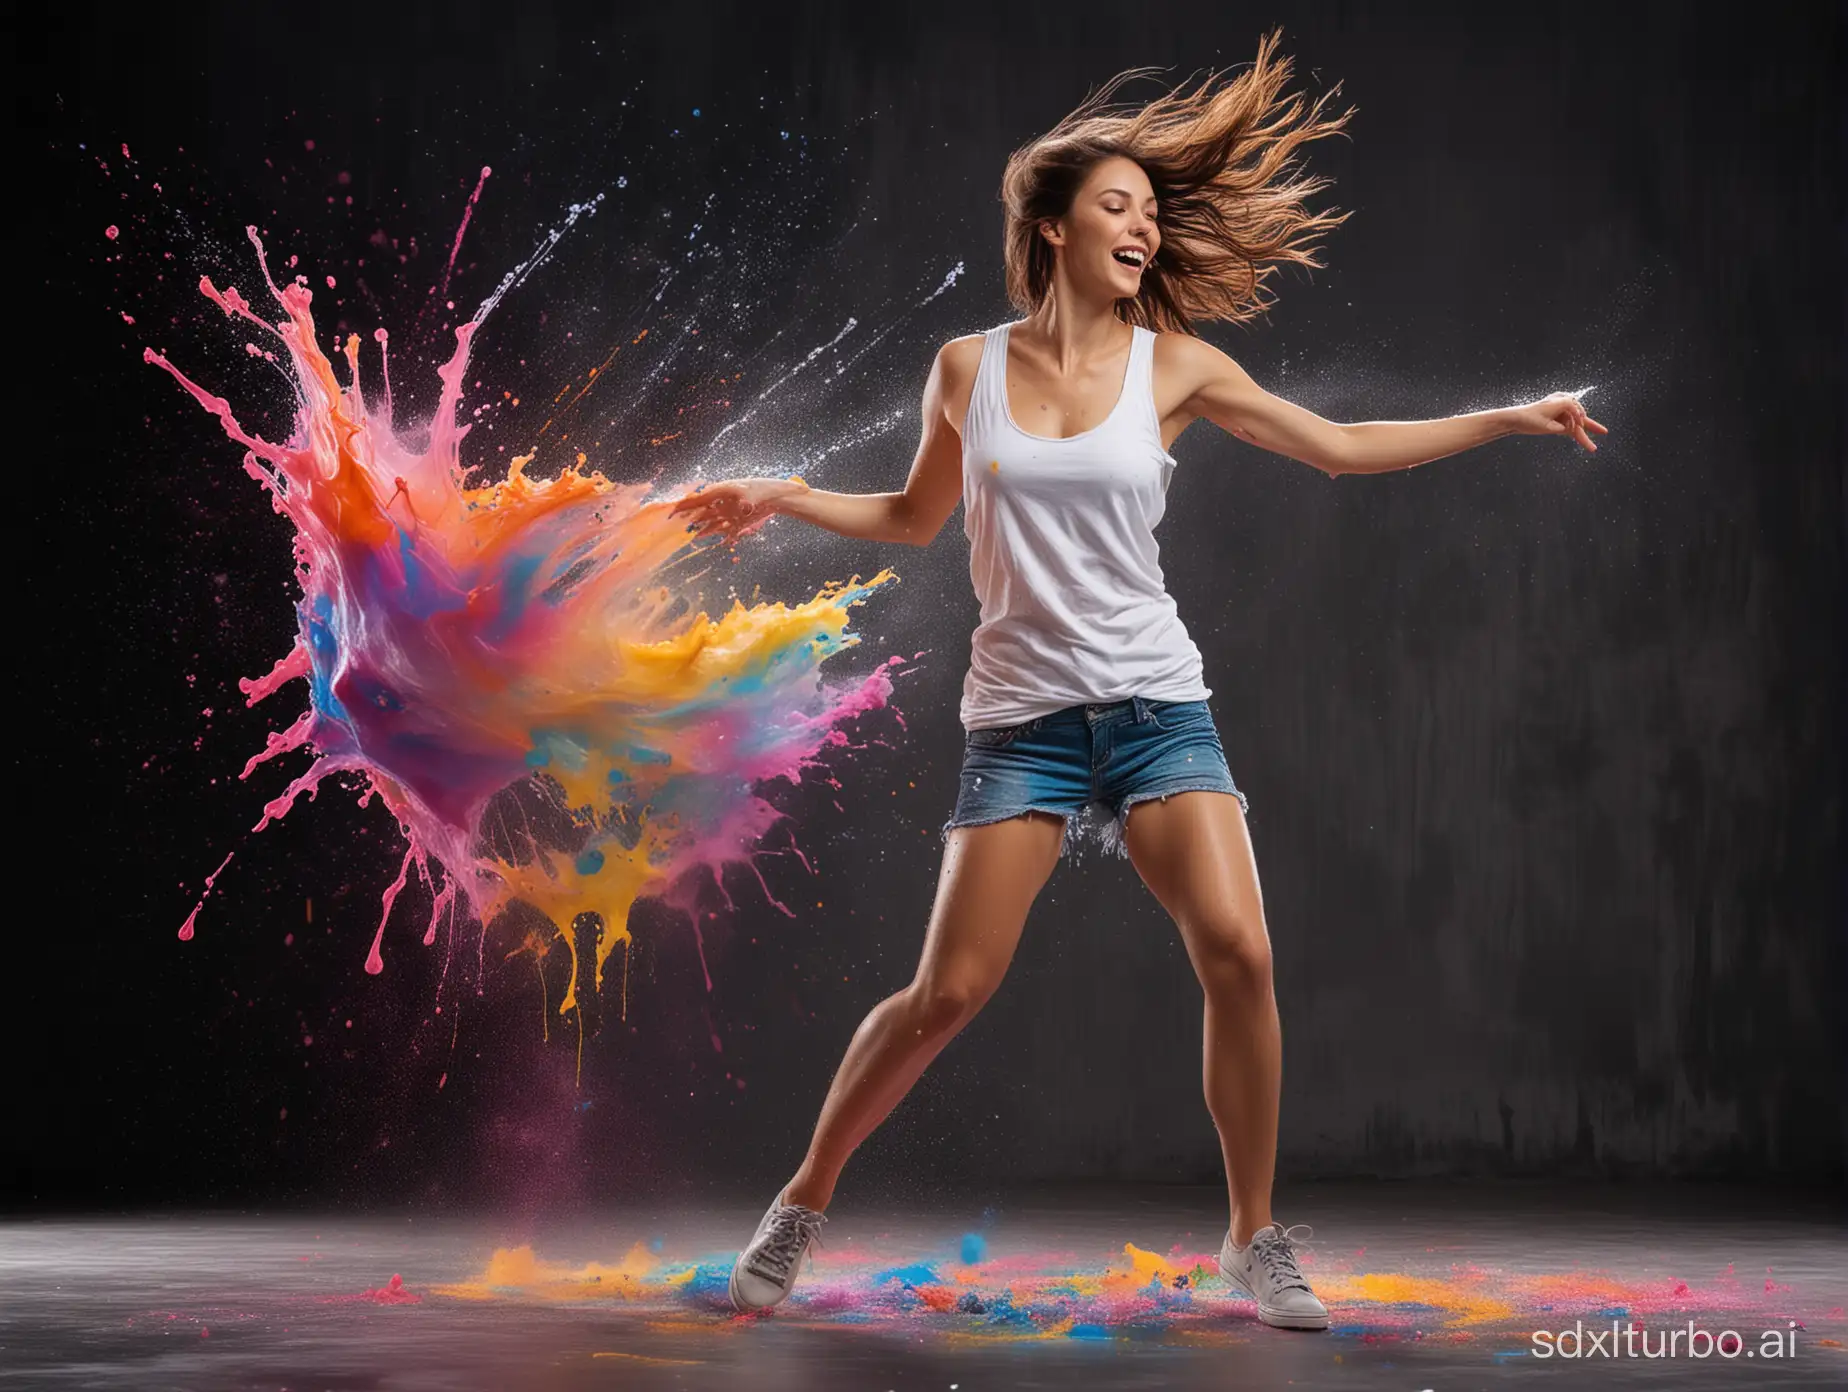 Dynamic-Dance-Playful-Woman-in-Colorful-Liquid-Splash-Dance